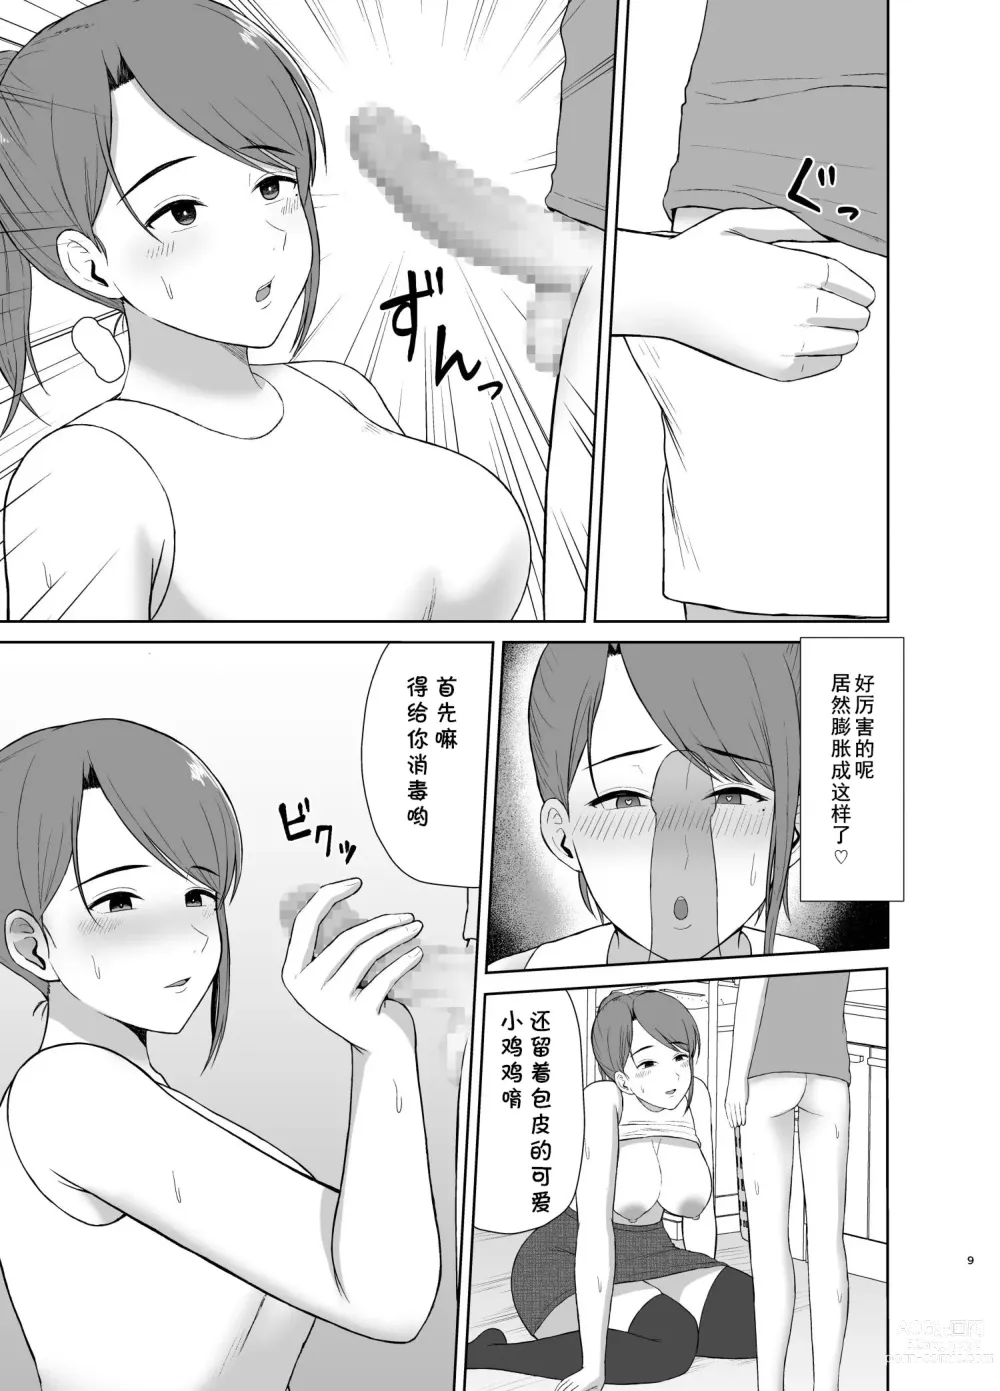 Page 9 of doujinshi Tonari no Okaa-san